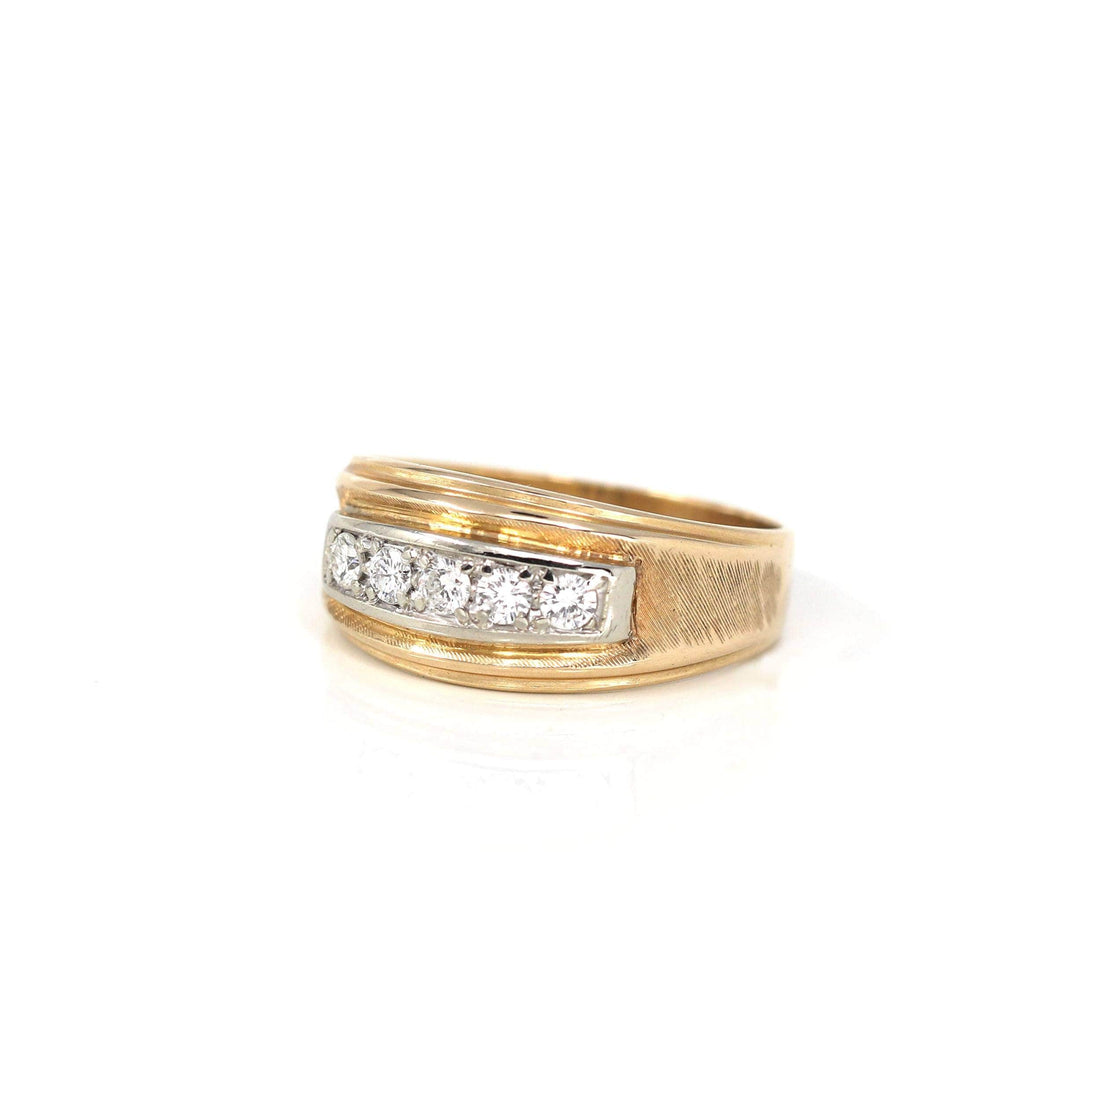 Baikalla Jewelry Gold Diamond Men's Ring 14k Yellow Gold Diamond Men's Wedding Band Ring